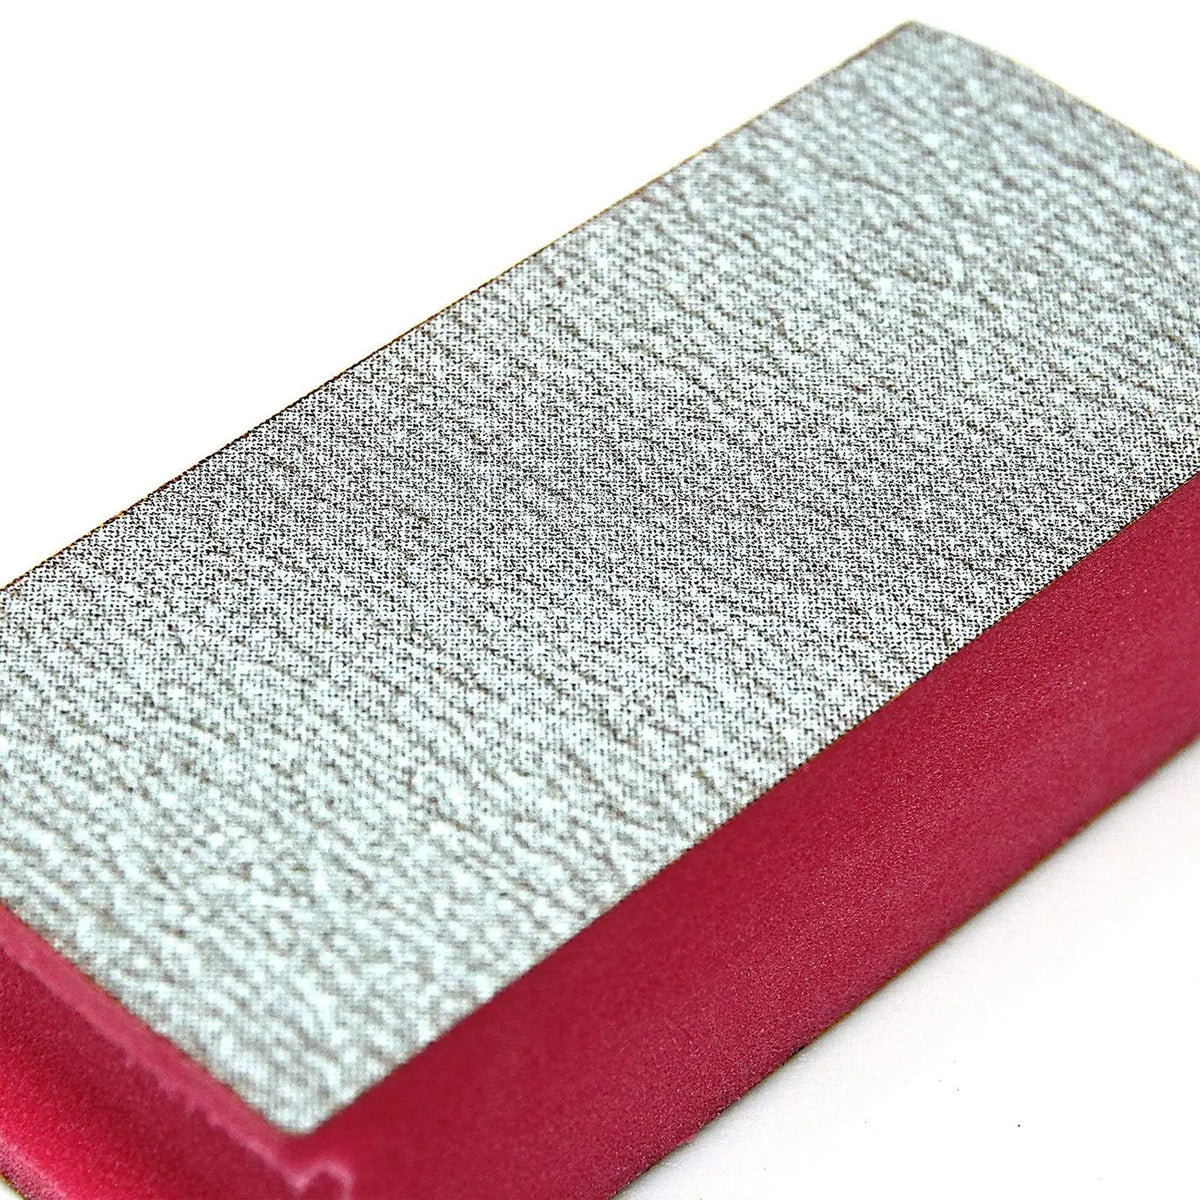 HASEGAWA Foamed Polyethylene Cutting Board Scraper